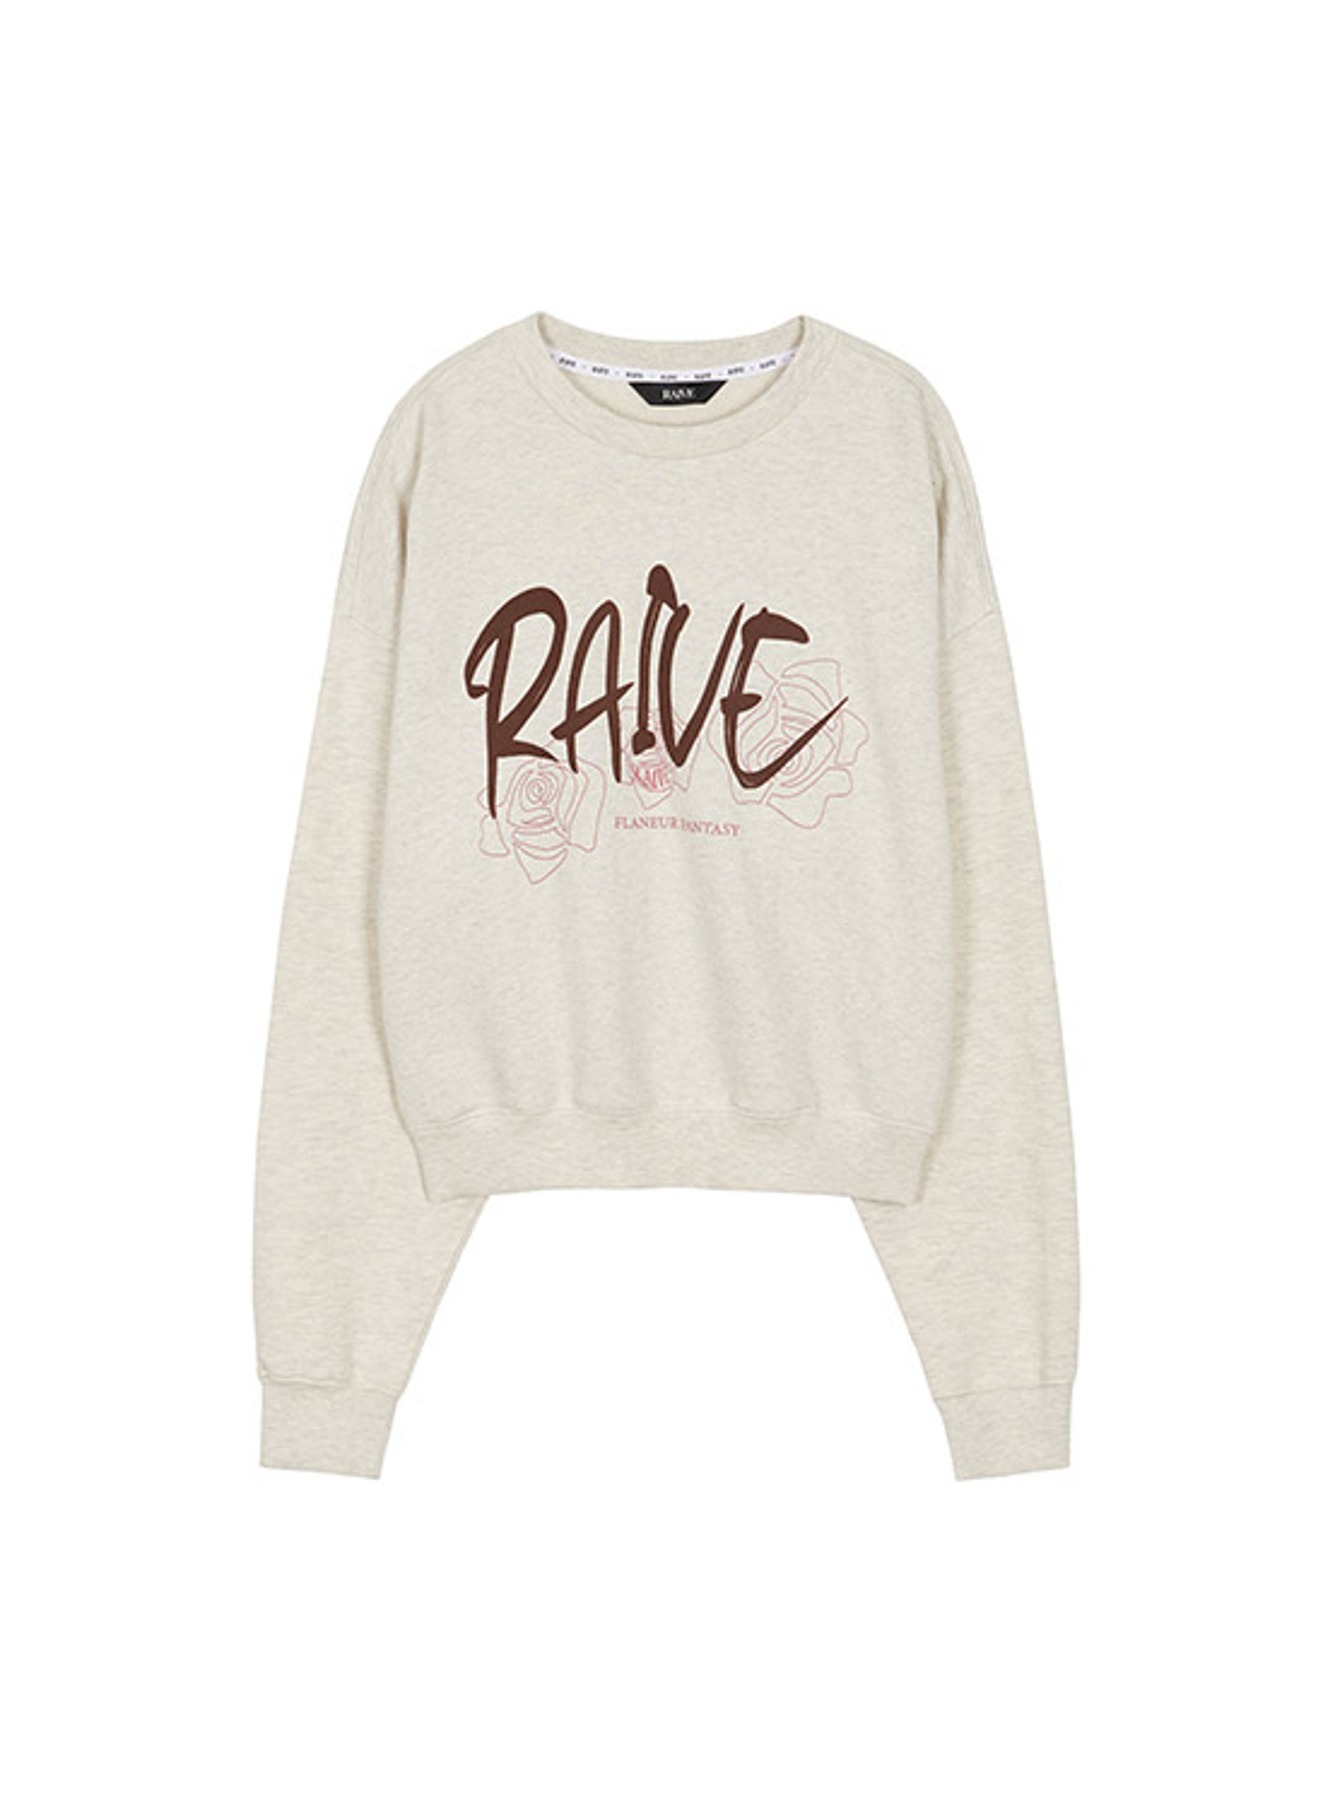 RAIVE Rose Printed Sweatshirt in Oatmeal VW2AE330-9L